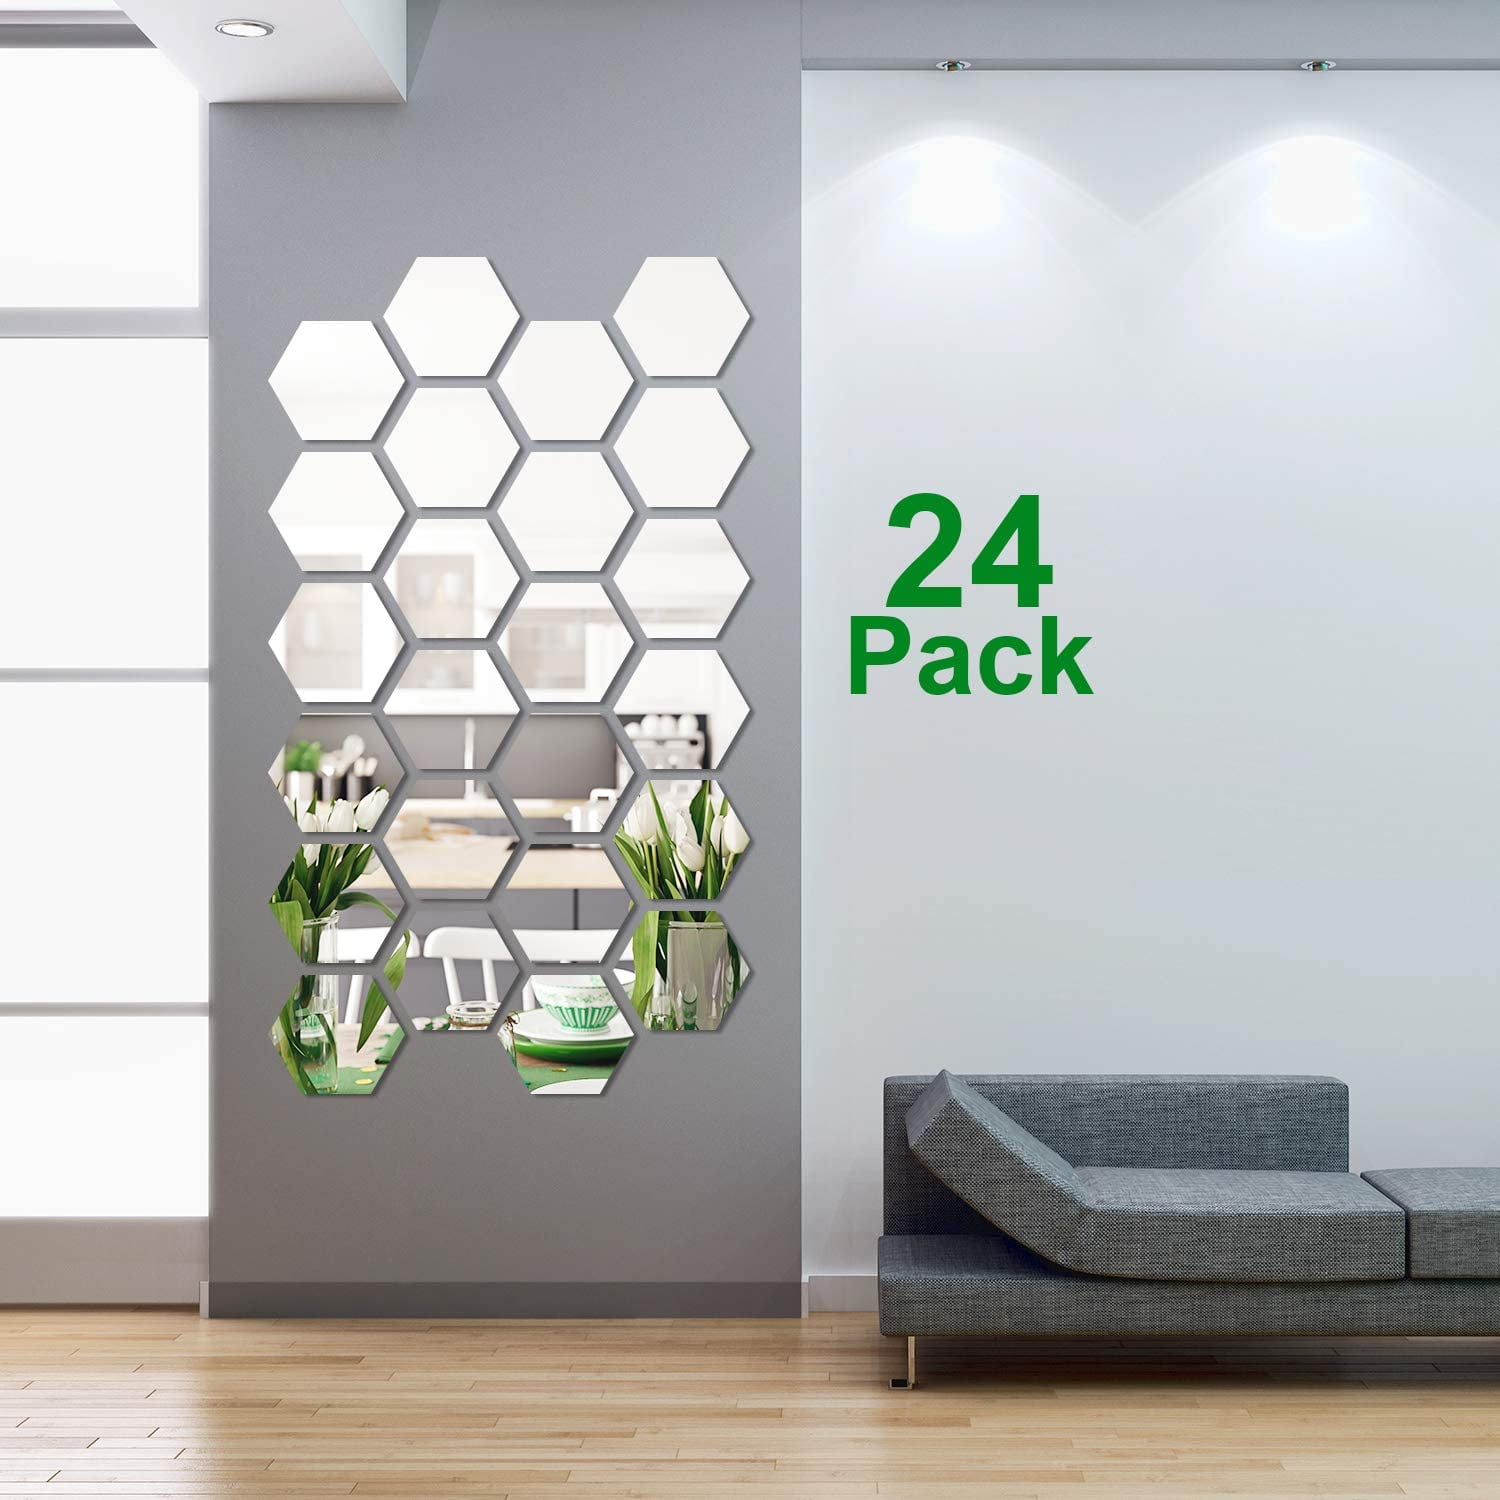 12x Mirror Tiles Hexagon Wall Stickers Self Adhesive Bedroom Decal Home Decor UK 